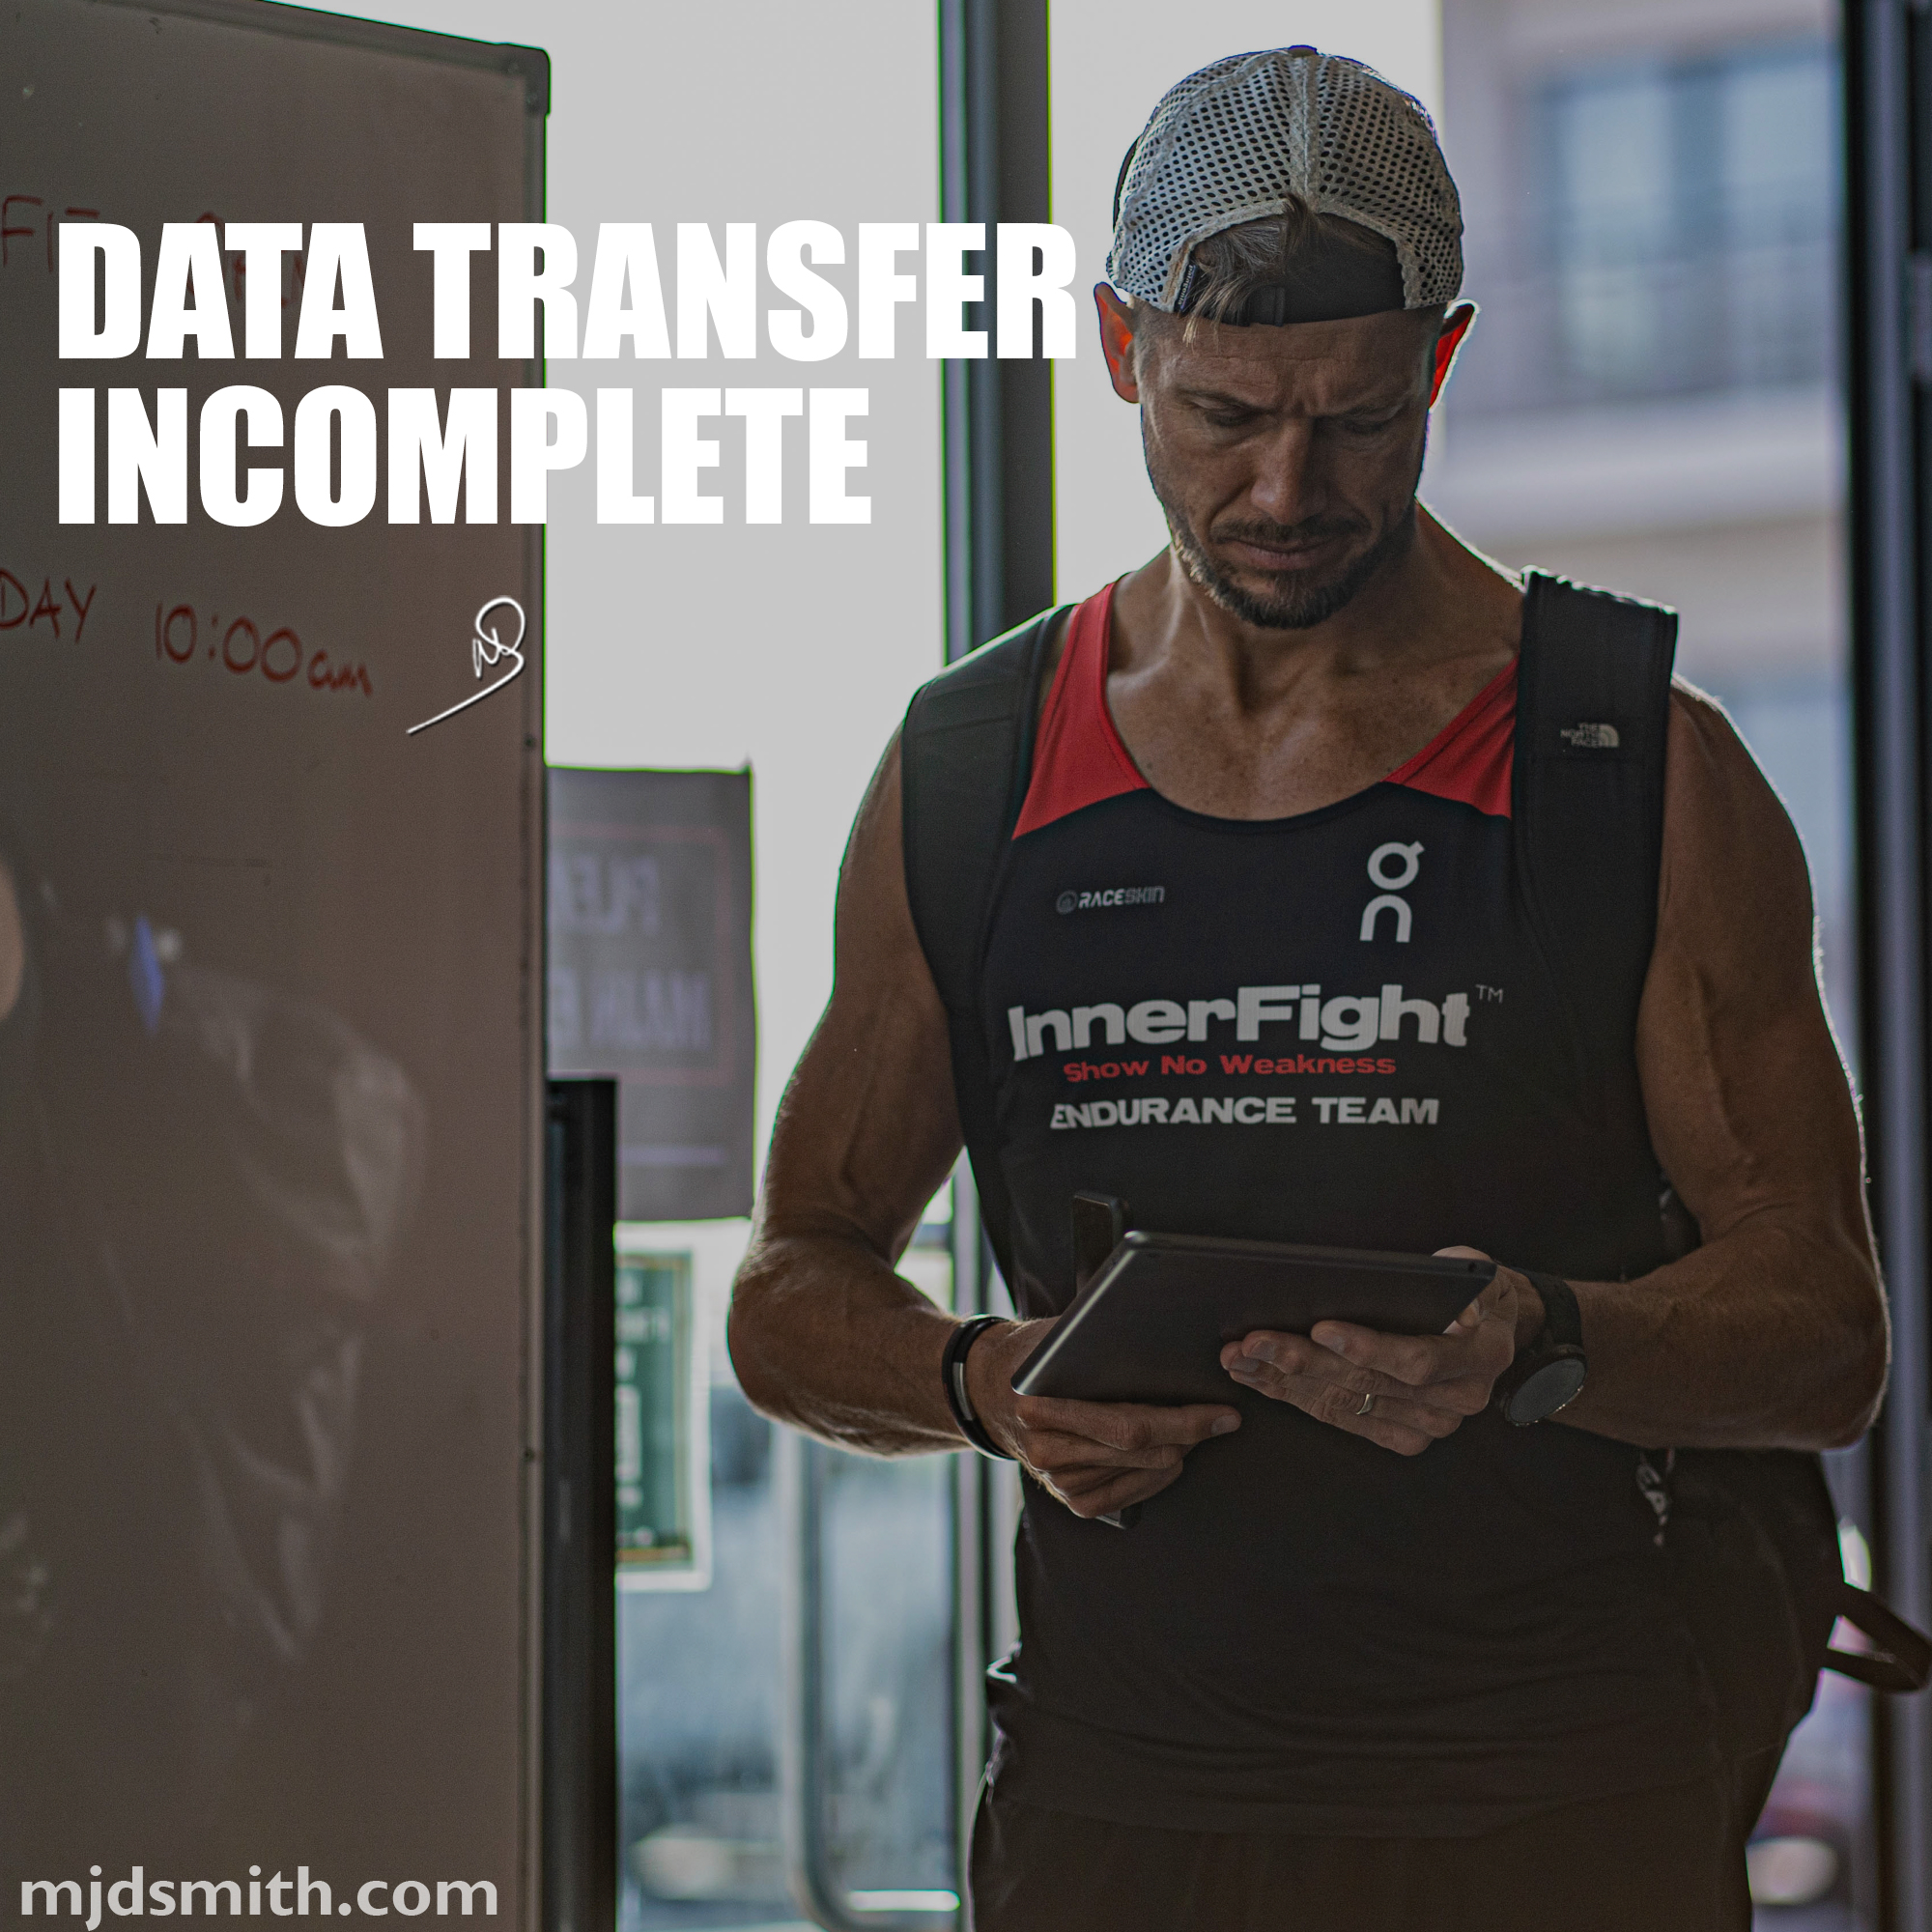 Data transfer incomplete